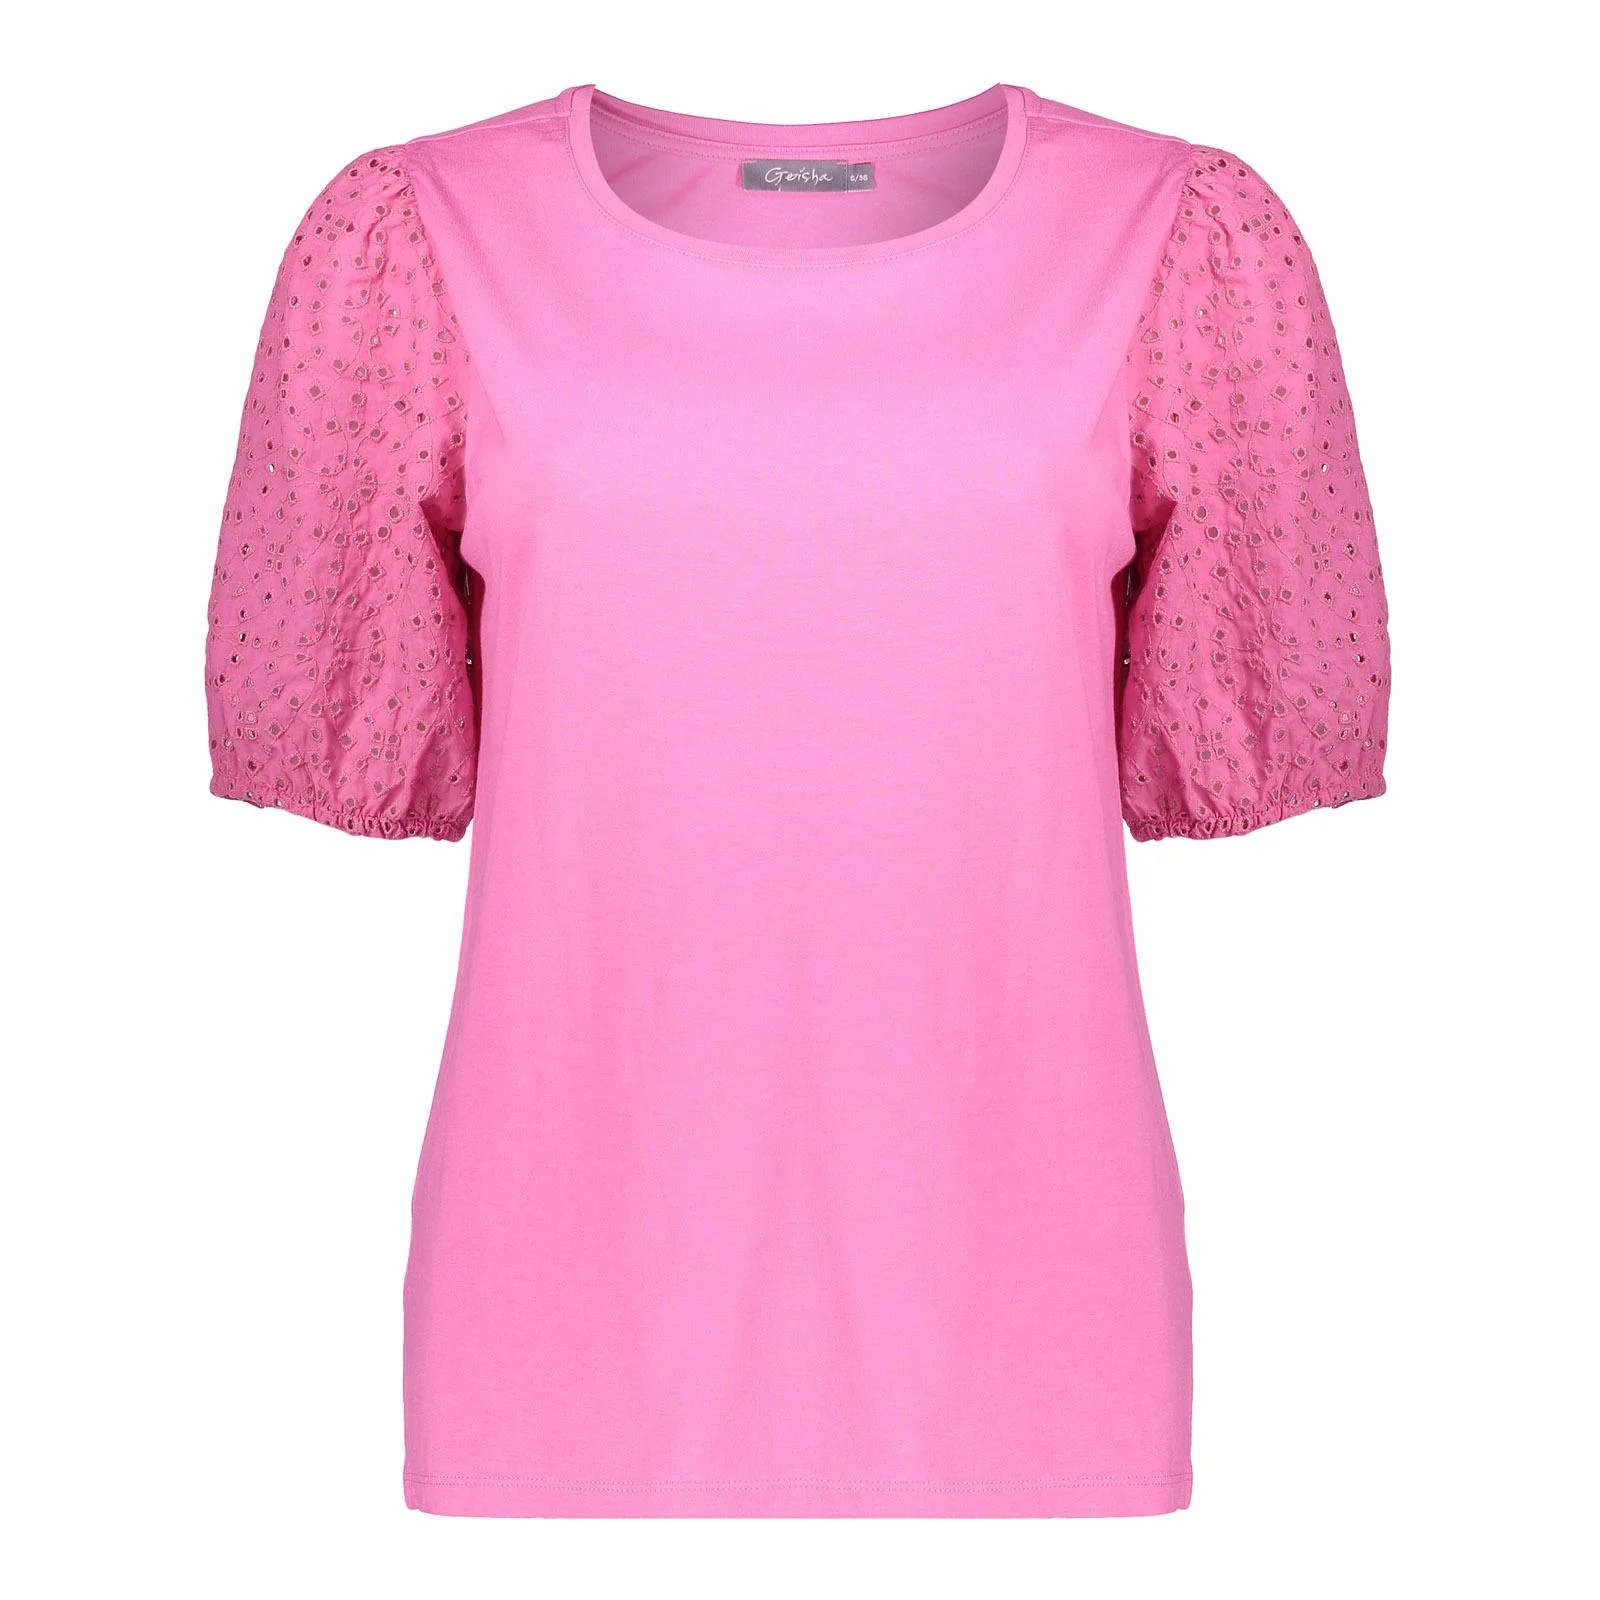 Geisha 42375-41 420 t-shirt brodery sleeves pink